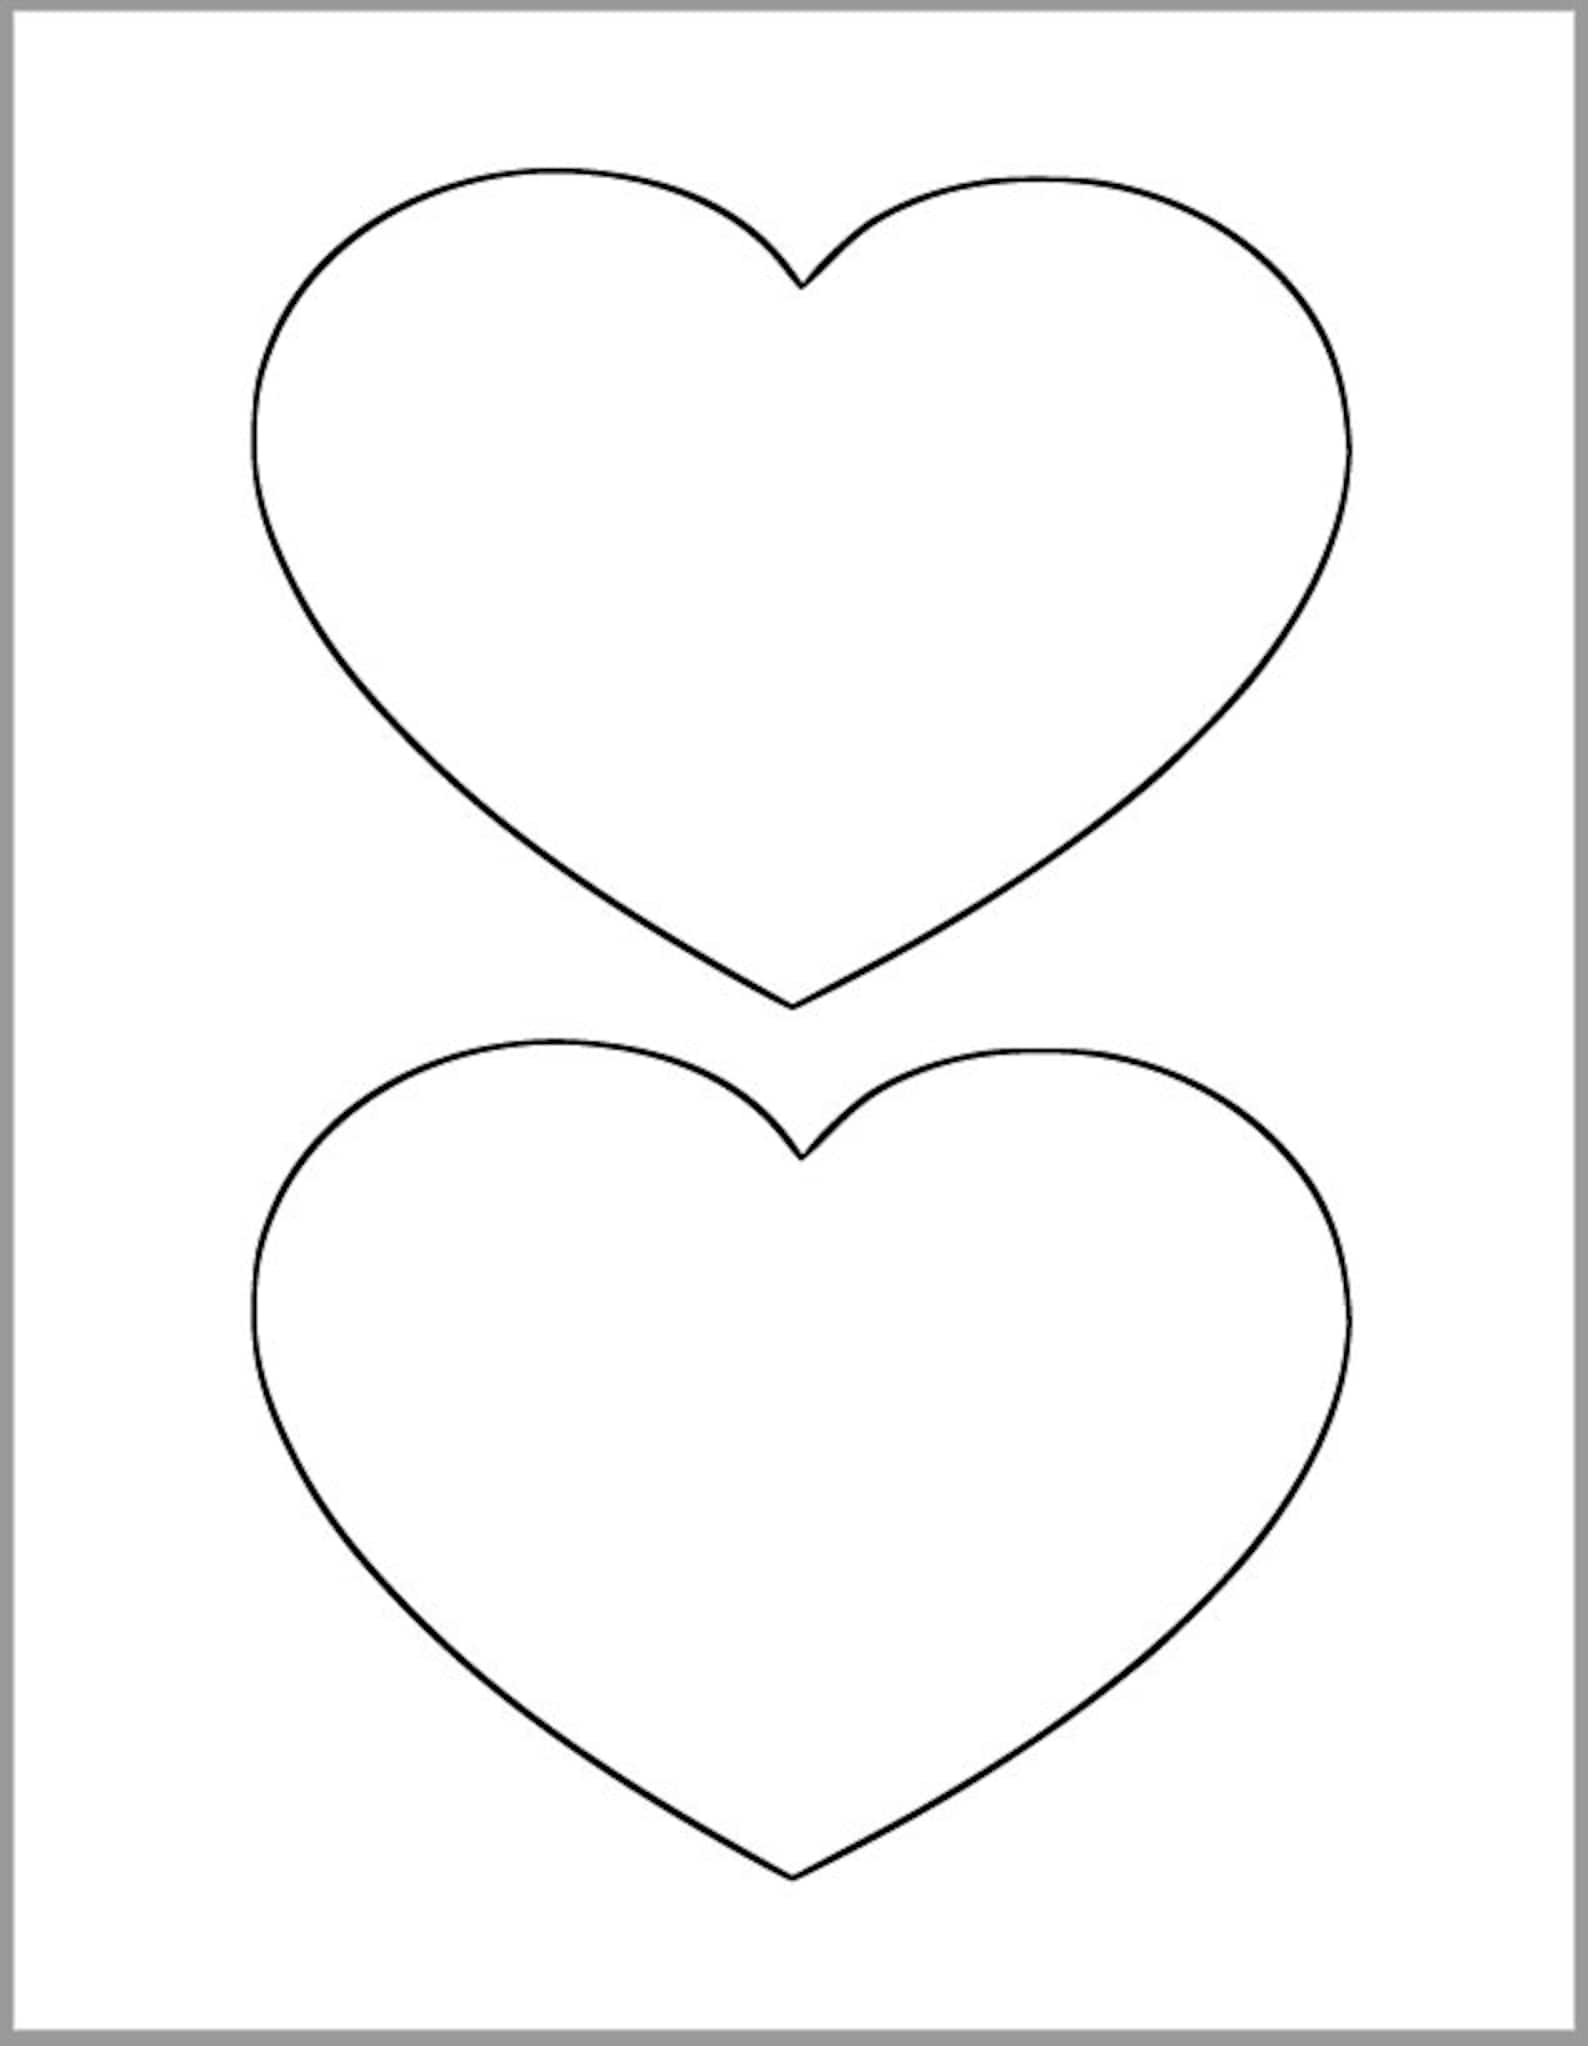 6 inch Heart Printable TemplateLarge Heart CutoutValentines Etsy